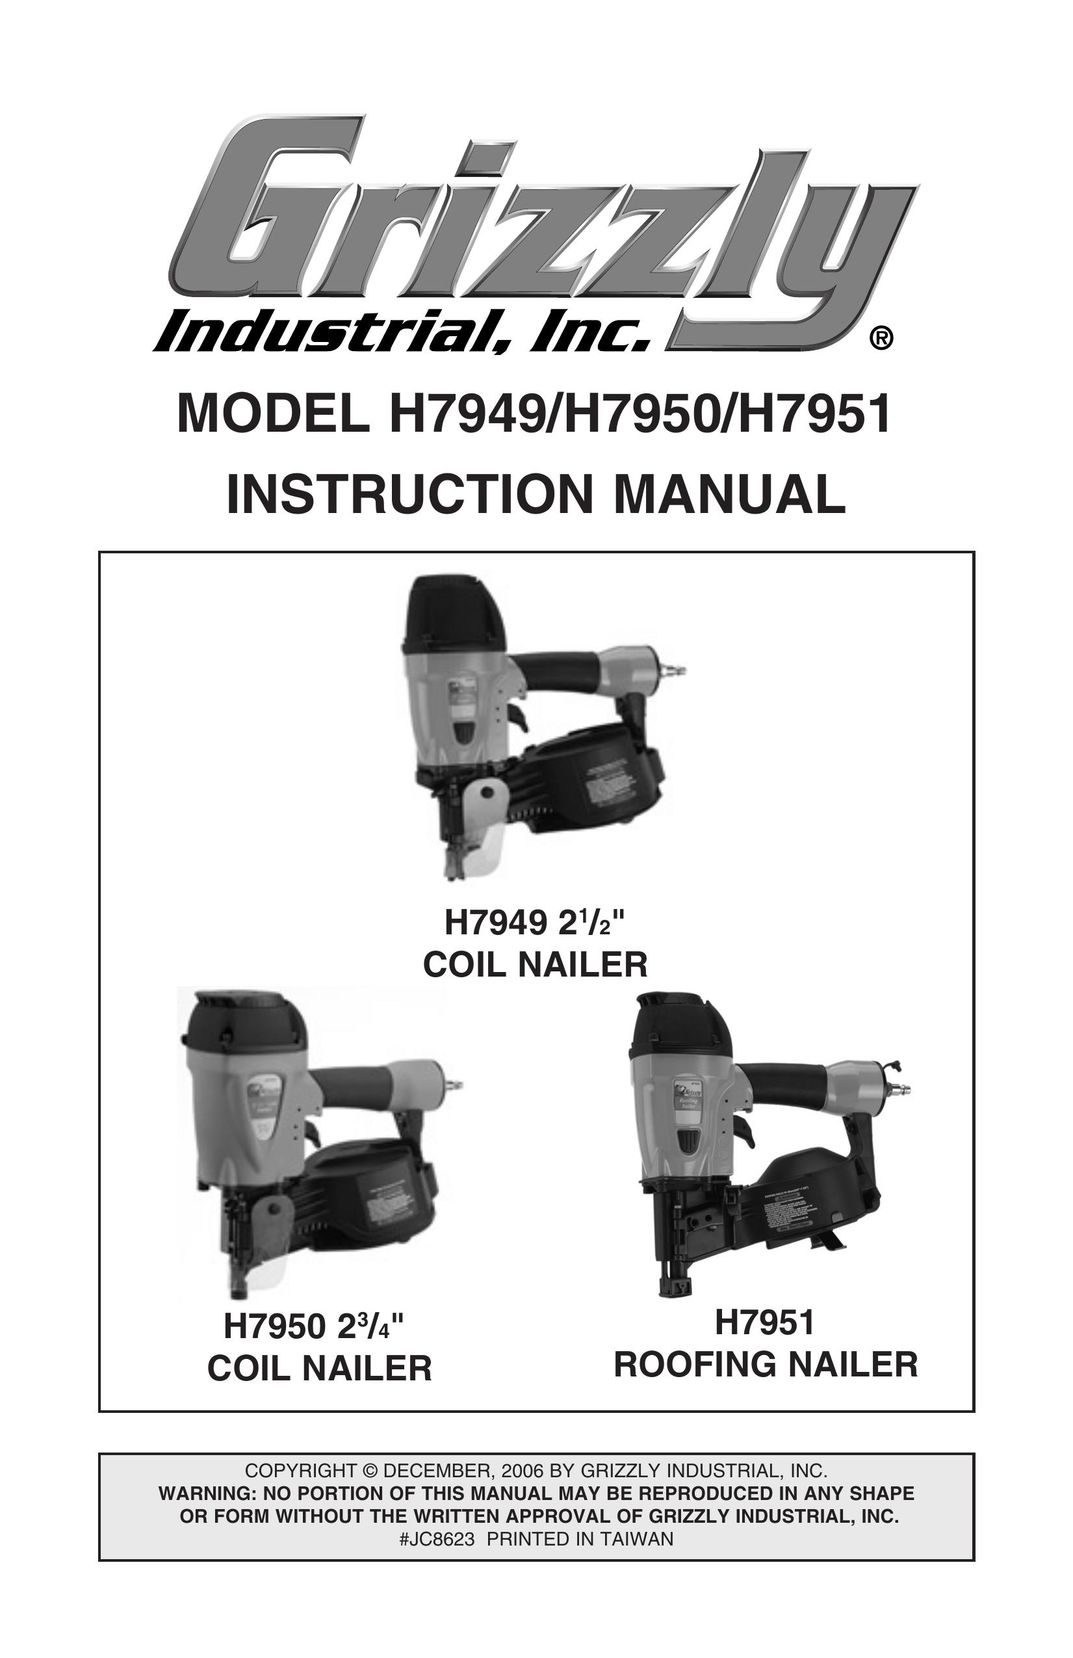 Grizzly H7950 Nail Gun User Manual